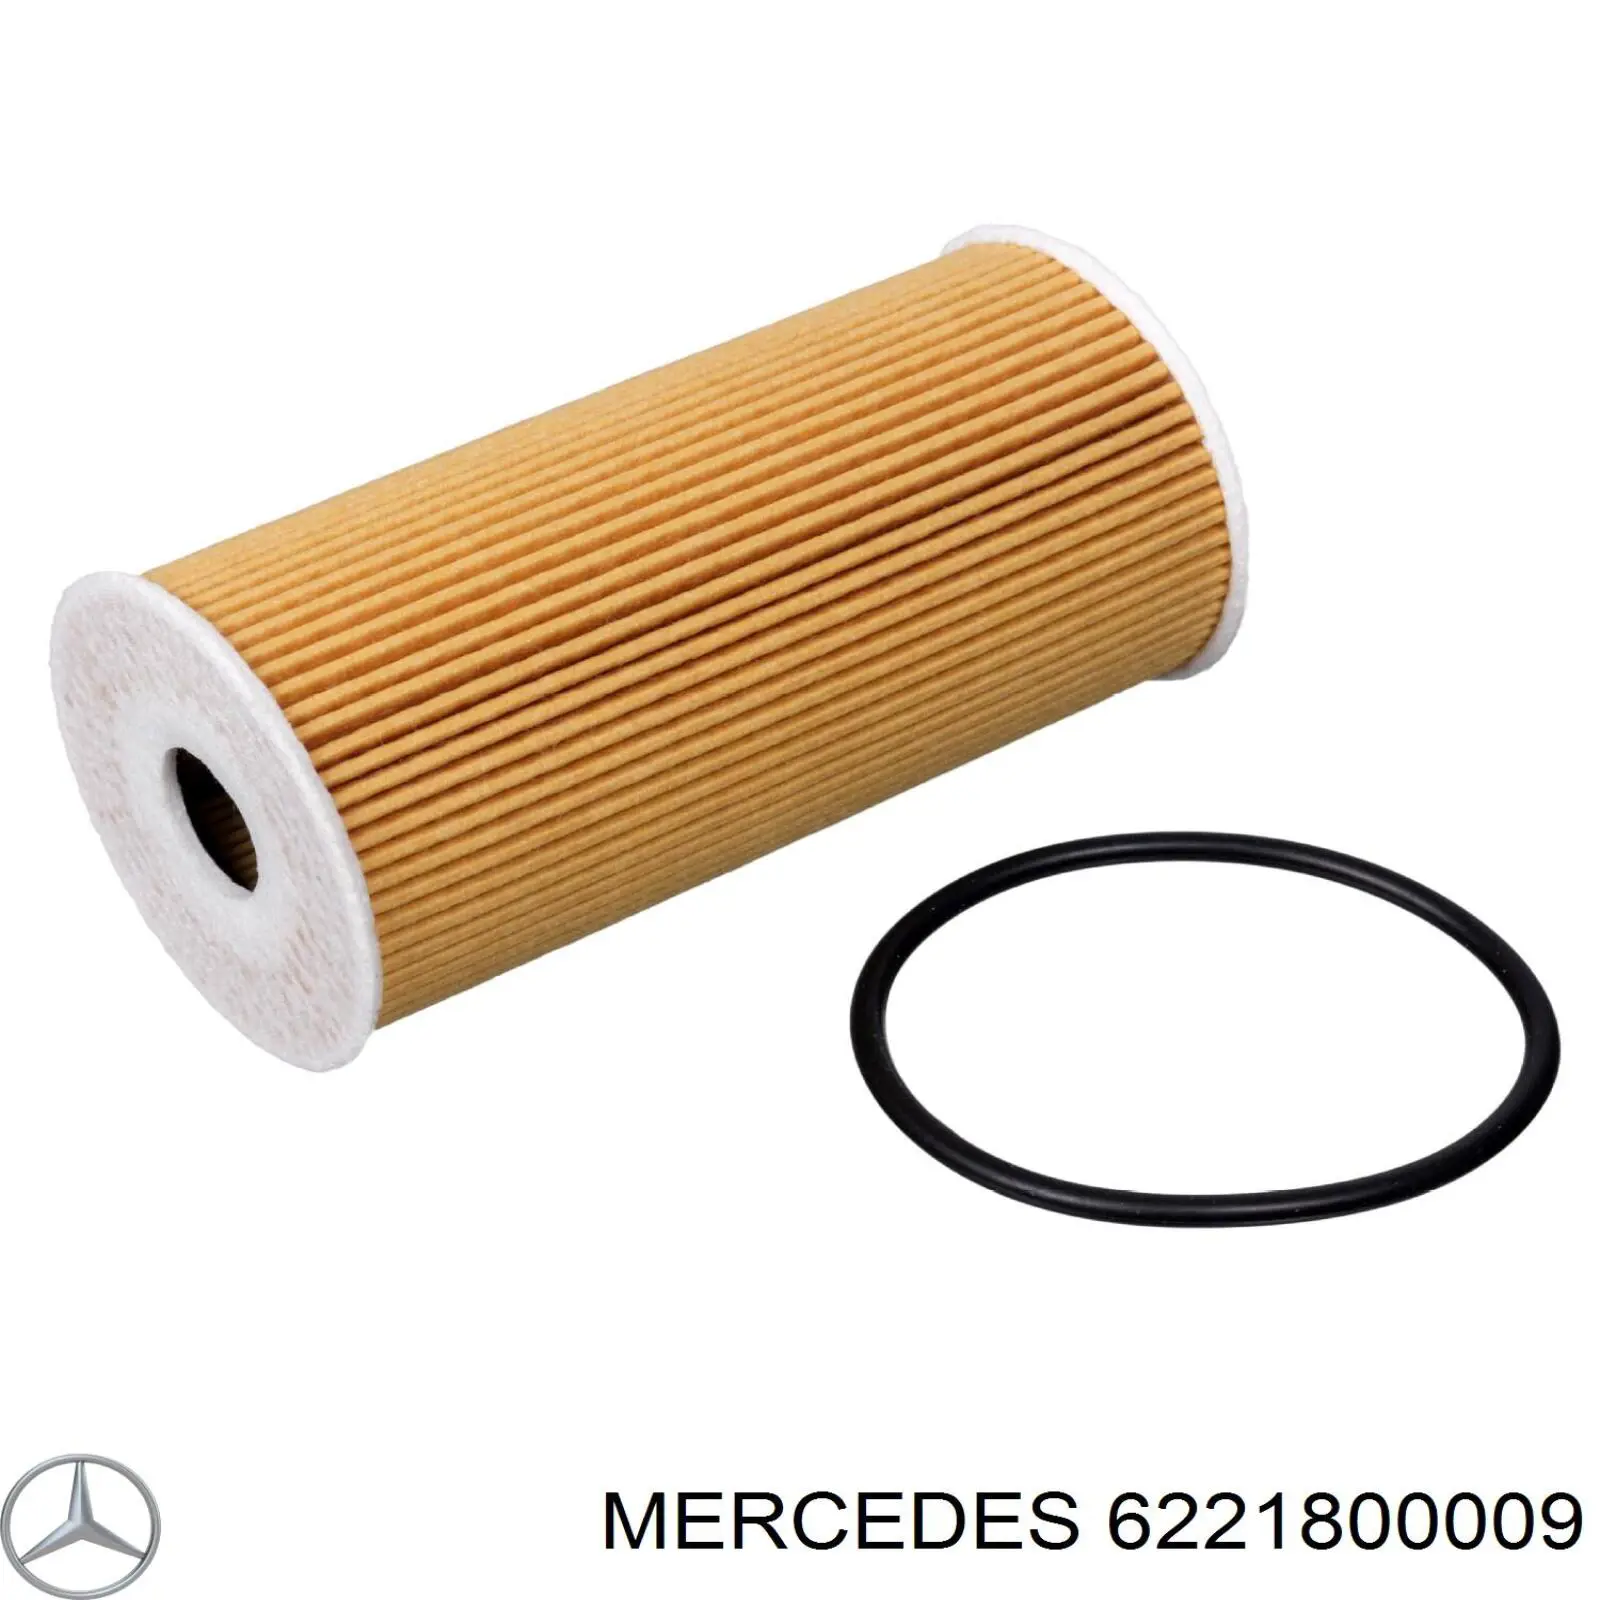 6221800009 Mercedes filtro de aceite